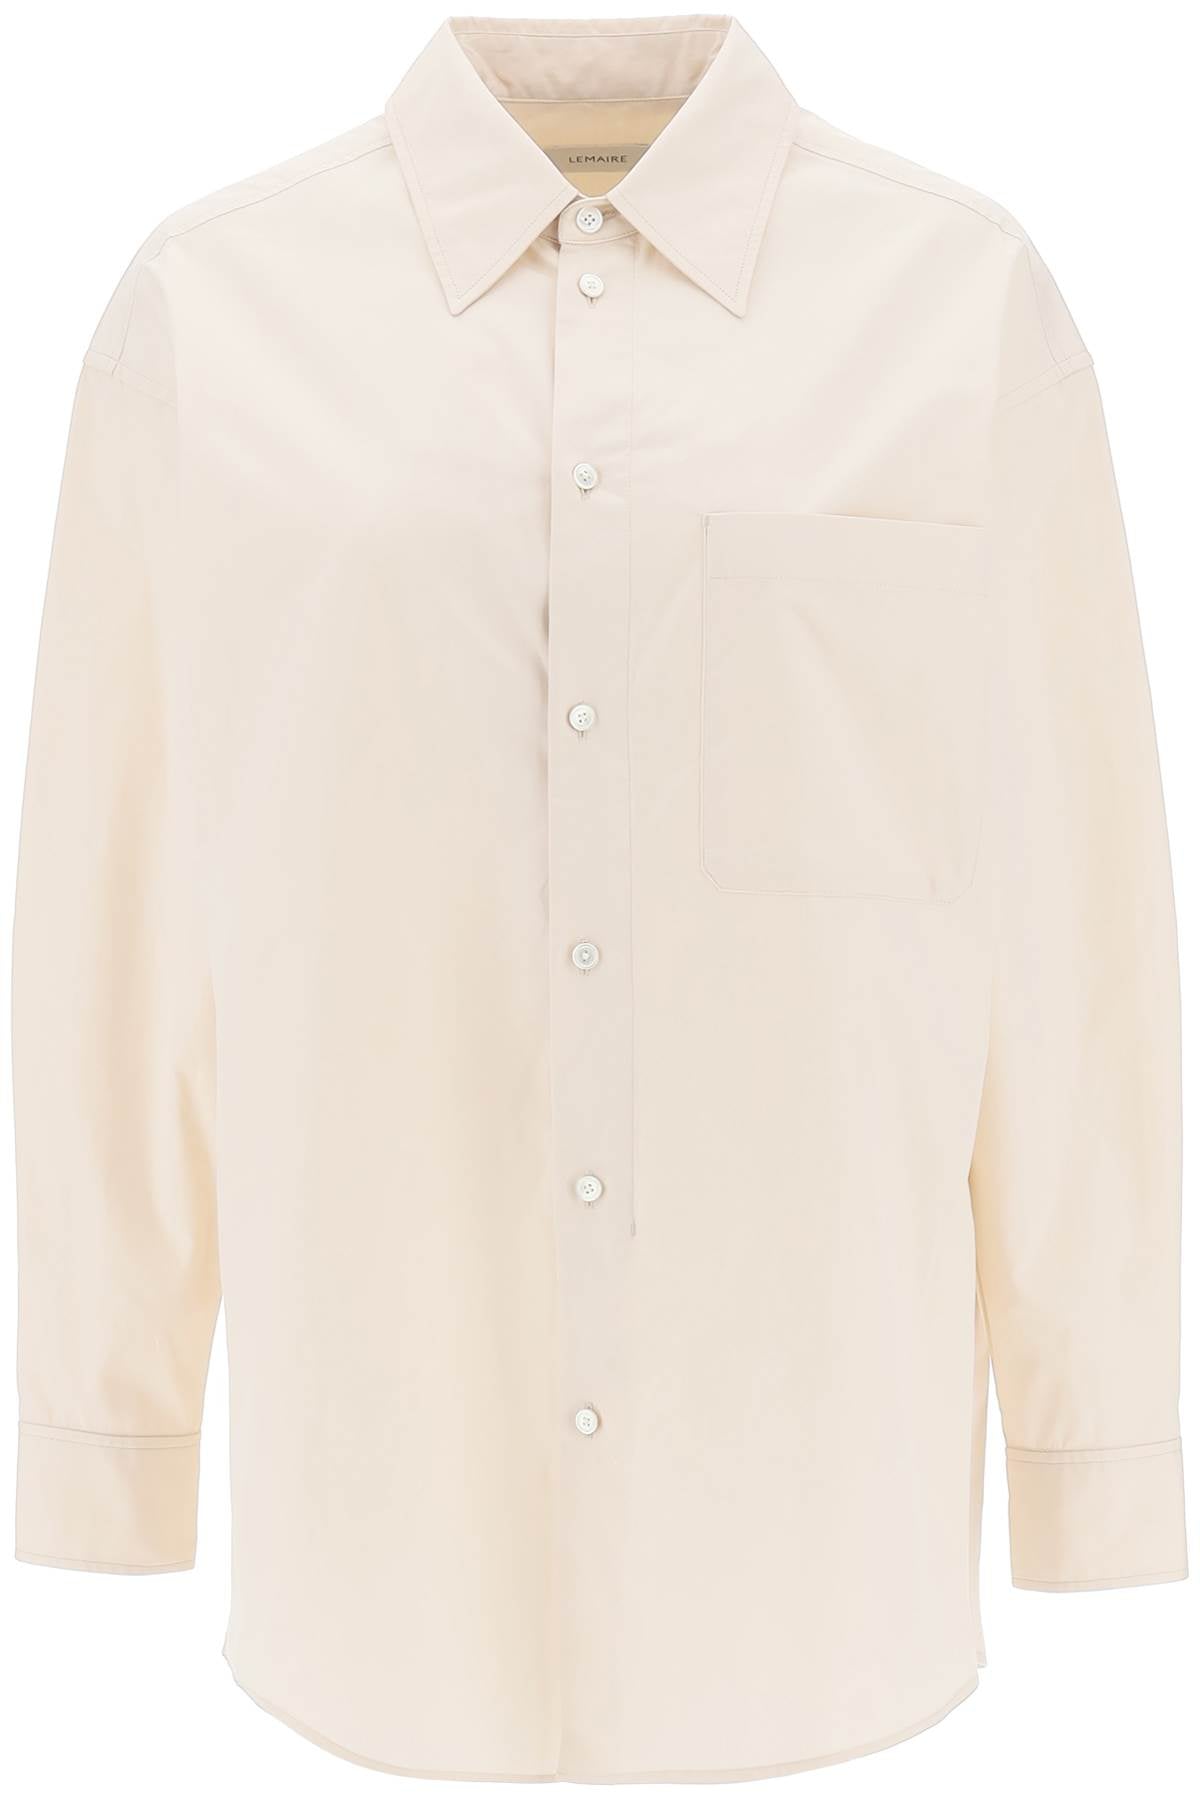 Lemaire oversized shirt in poplin-0